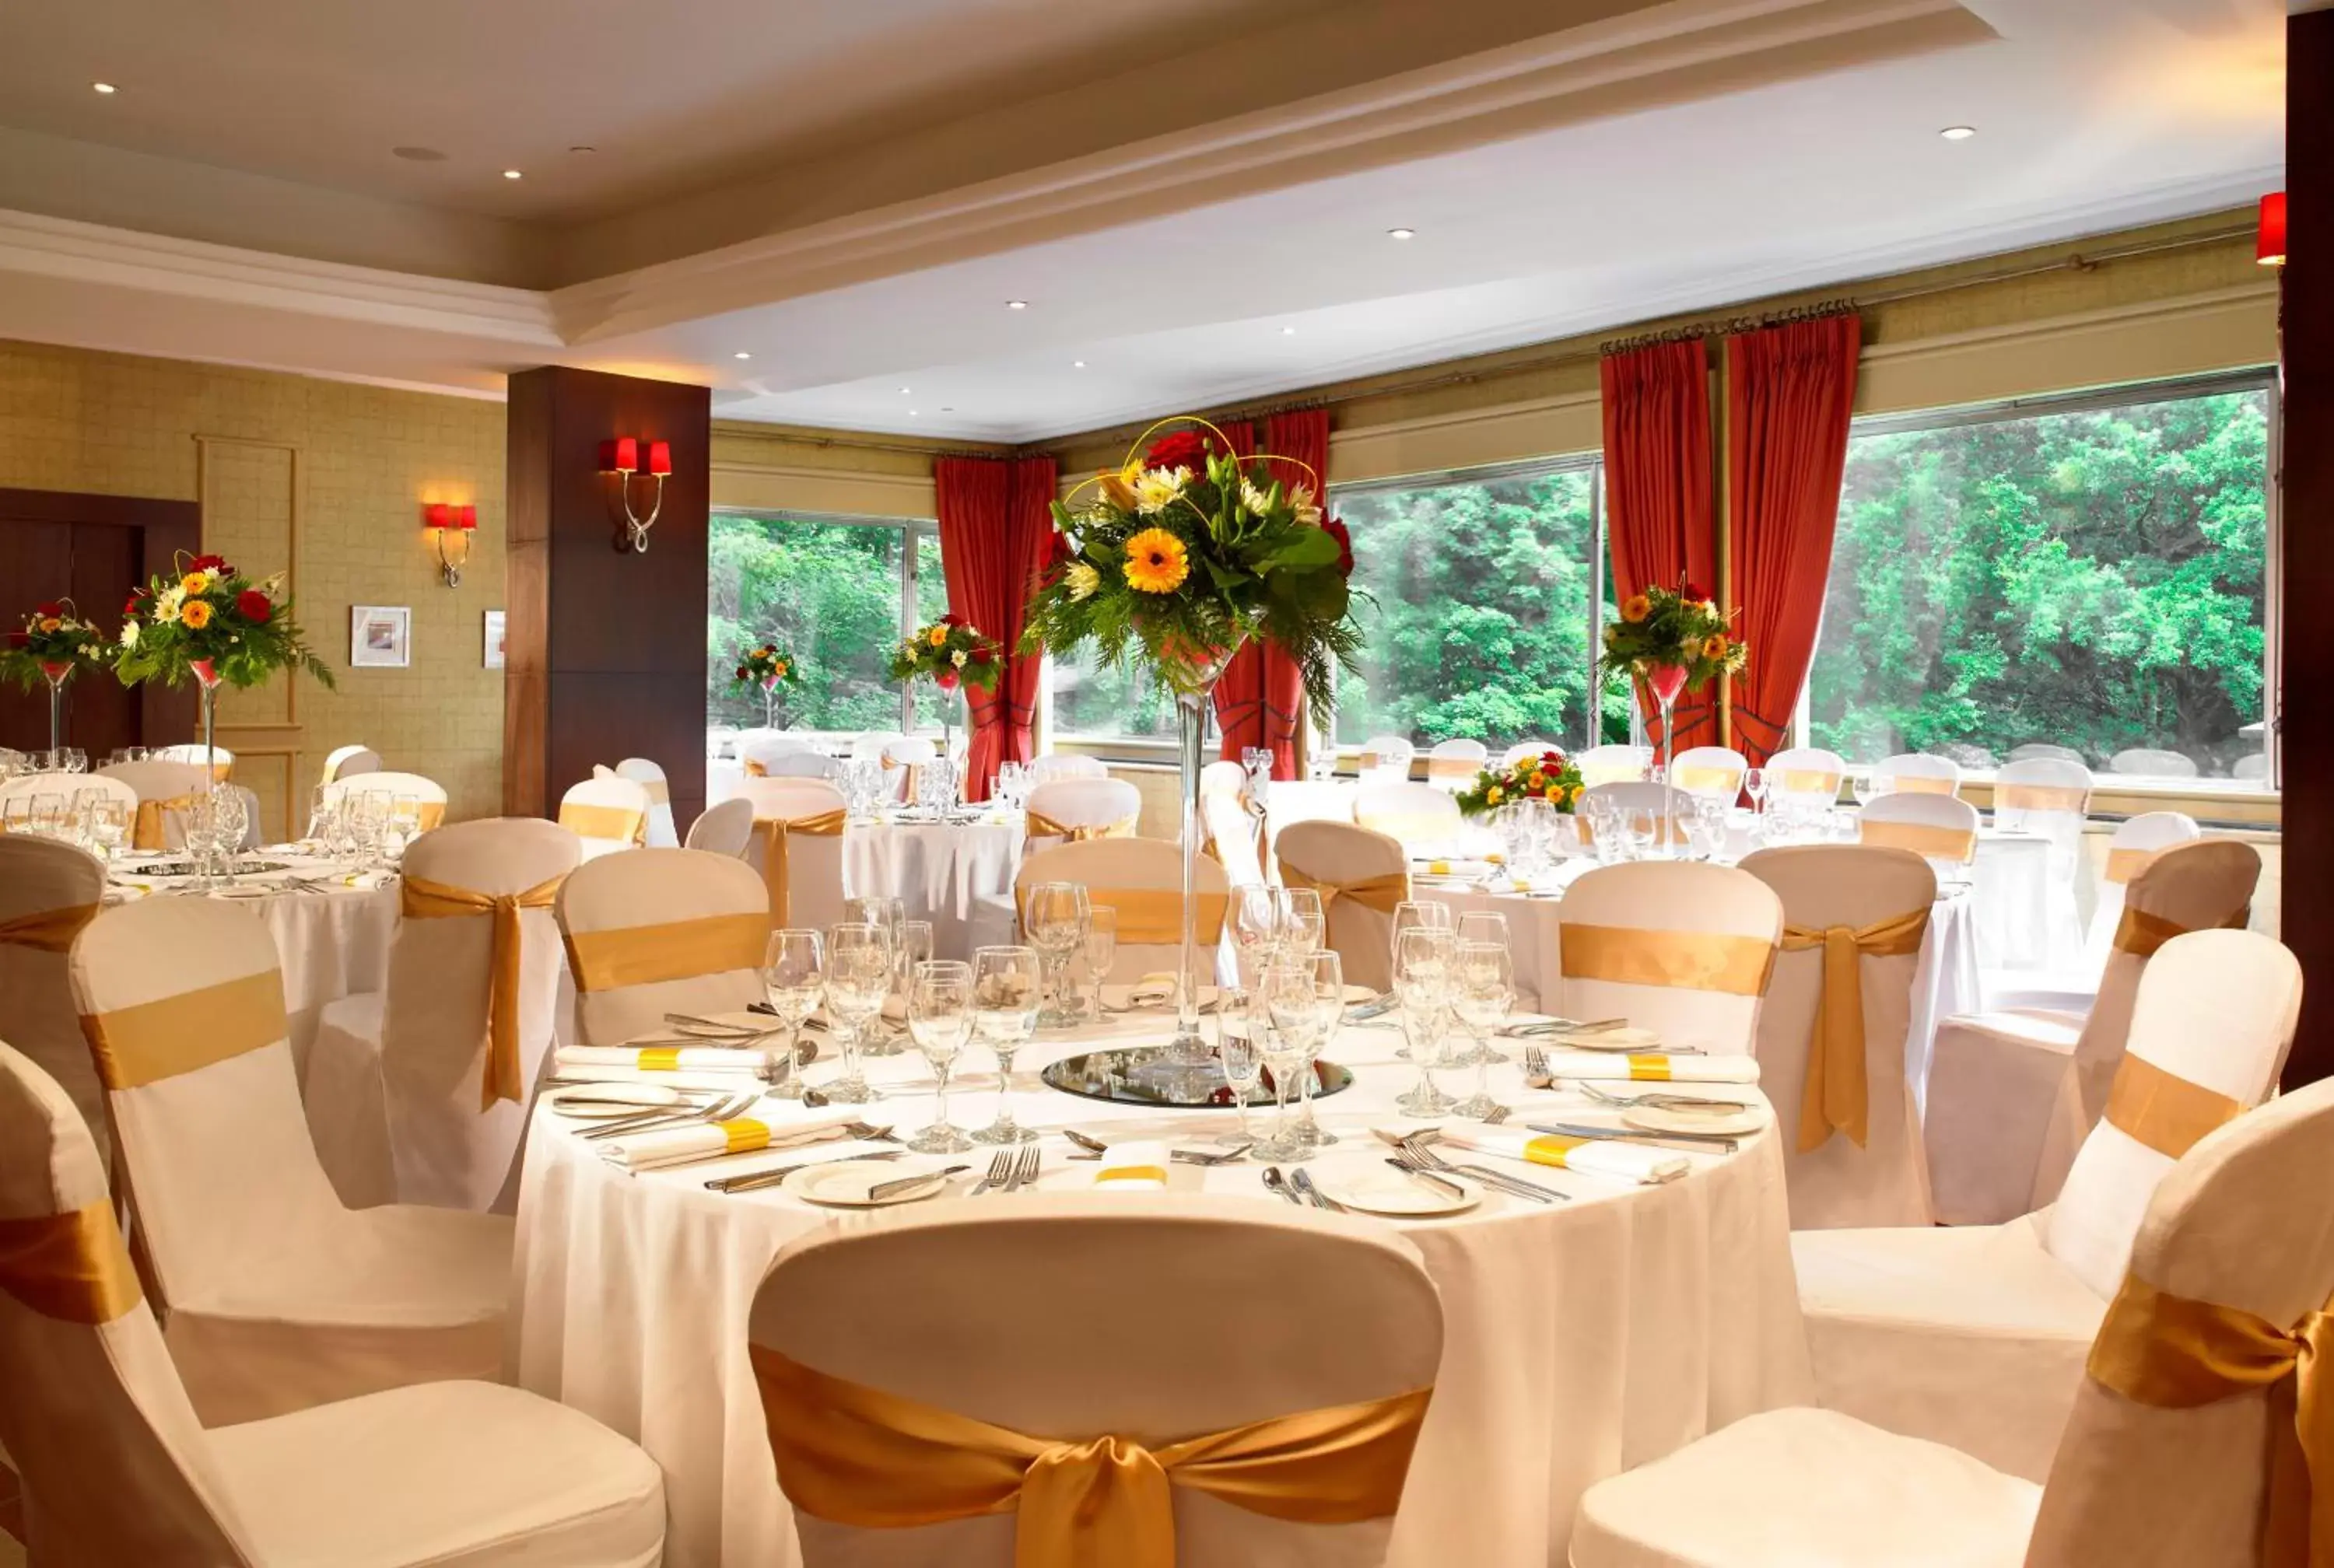 Banquet/Function facilities, Banquet Facilities in Grand Hotel Gosforth Park